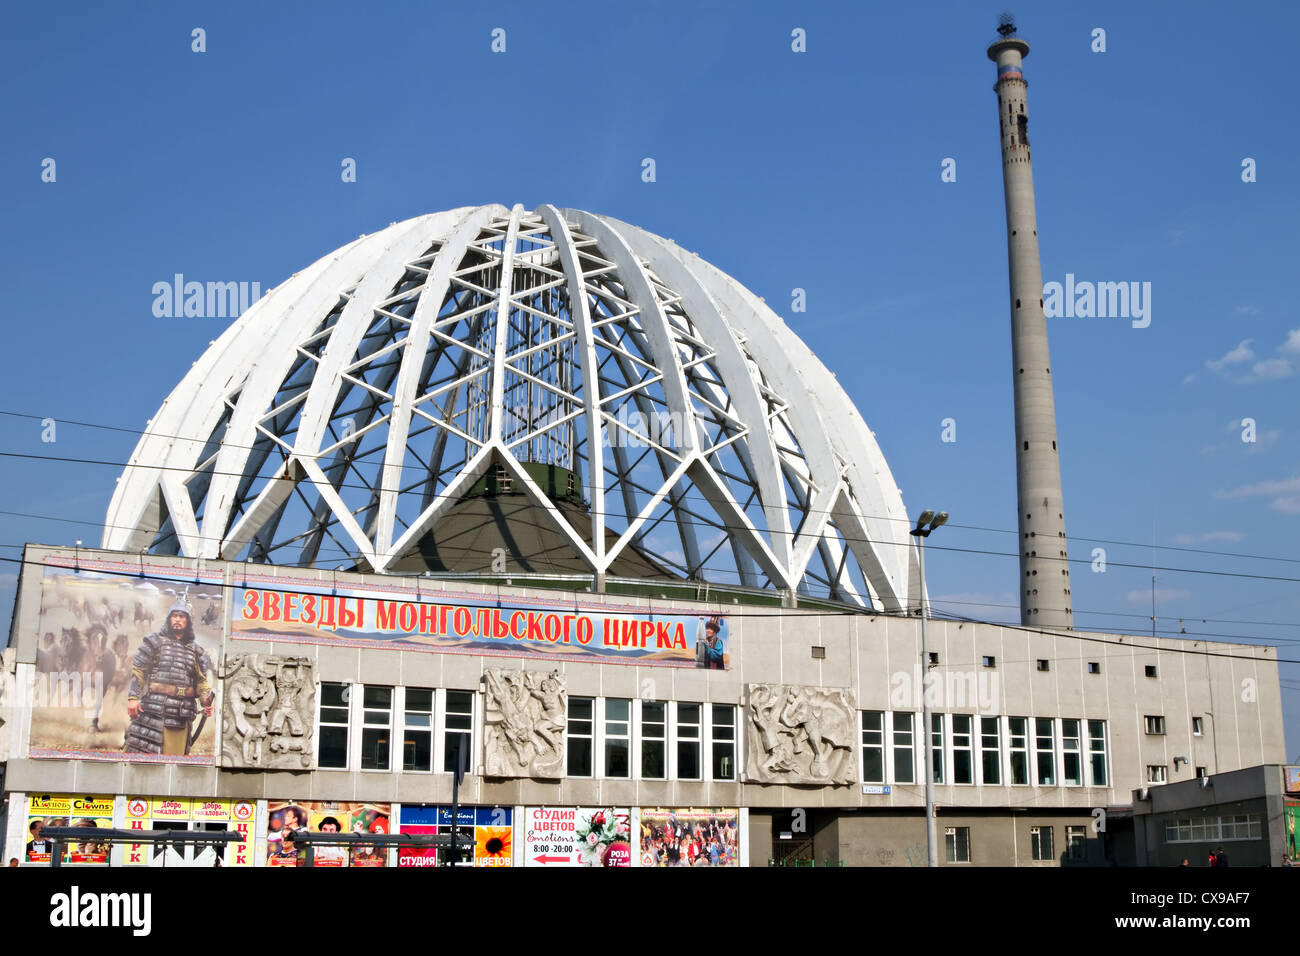 Yekaterinburg circus. Ekaterinburg (Yekaterinburg). City Sights. Russia. Stock Photo